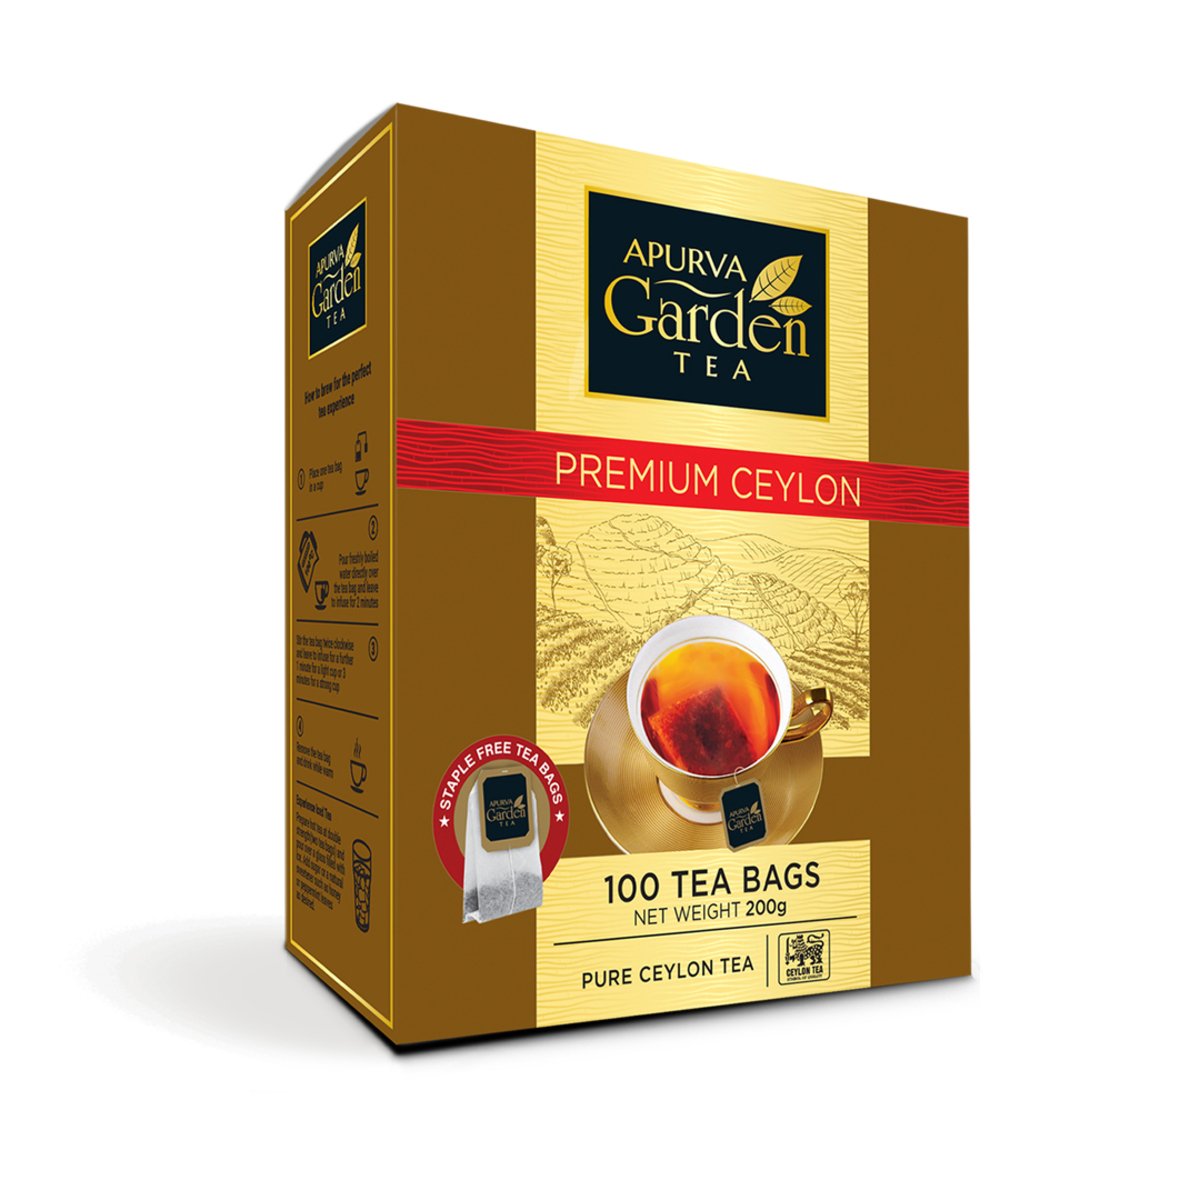 Apurva Garden Premium Ceylon Tea Bags 100s